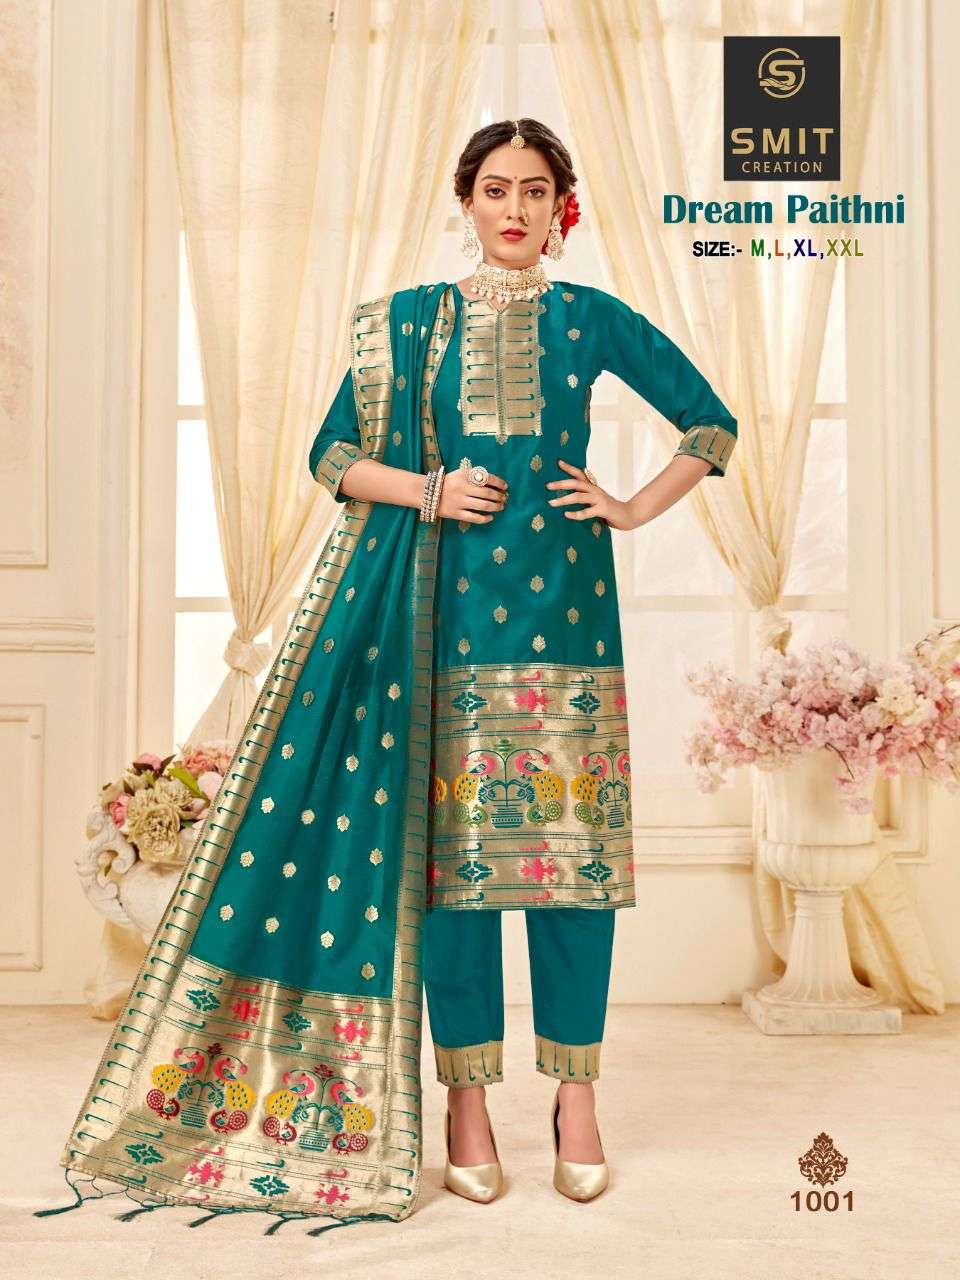 Smit Creation Dream Paithni Silk Festive Wear Top Bottom Dupatta Dealer New Designs